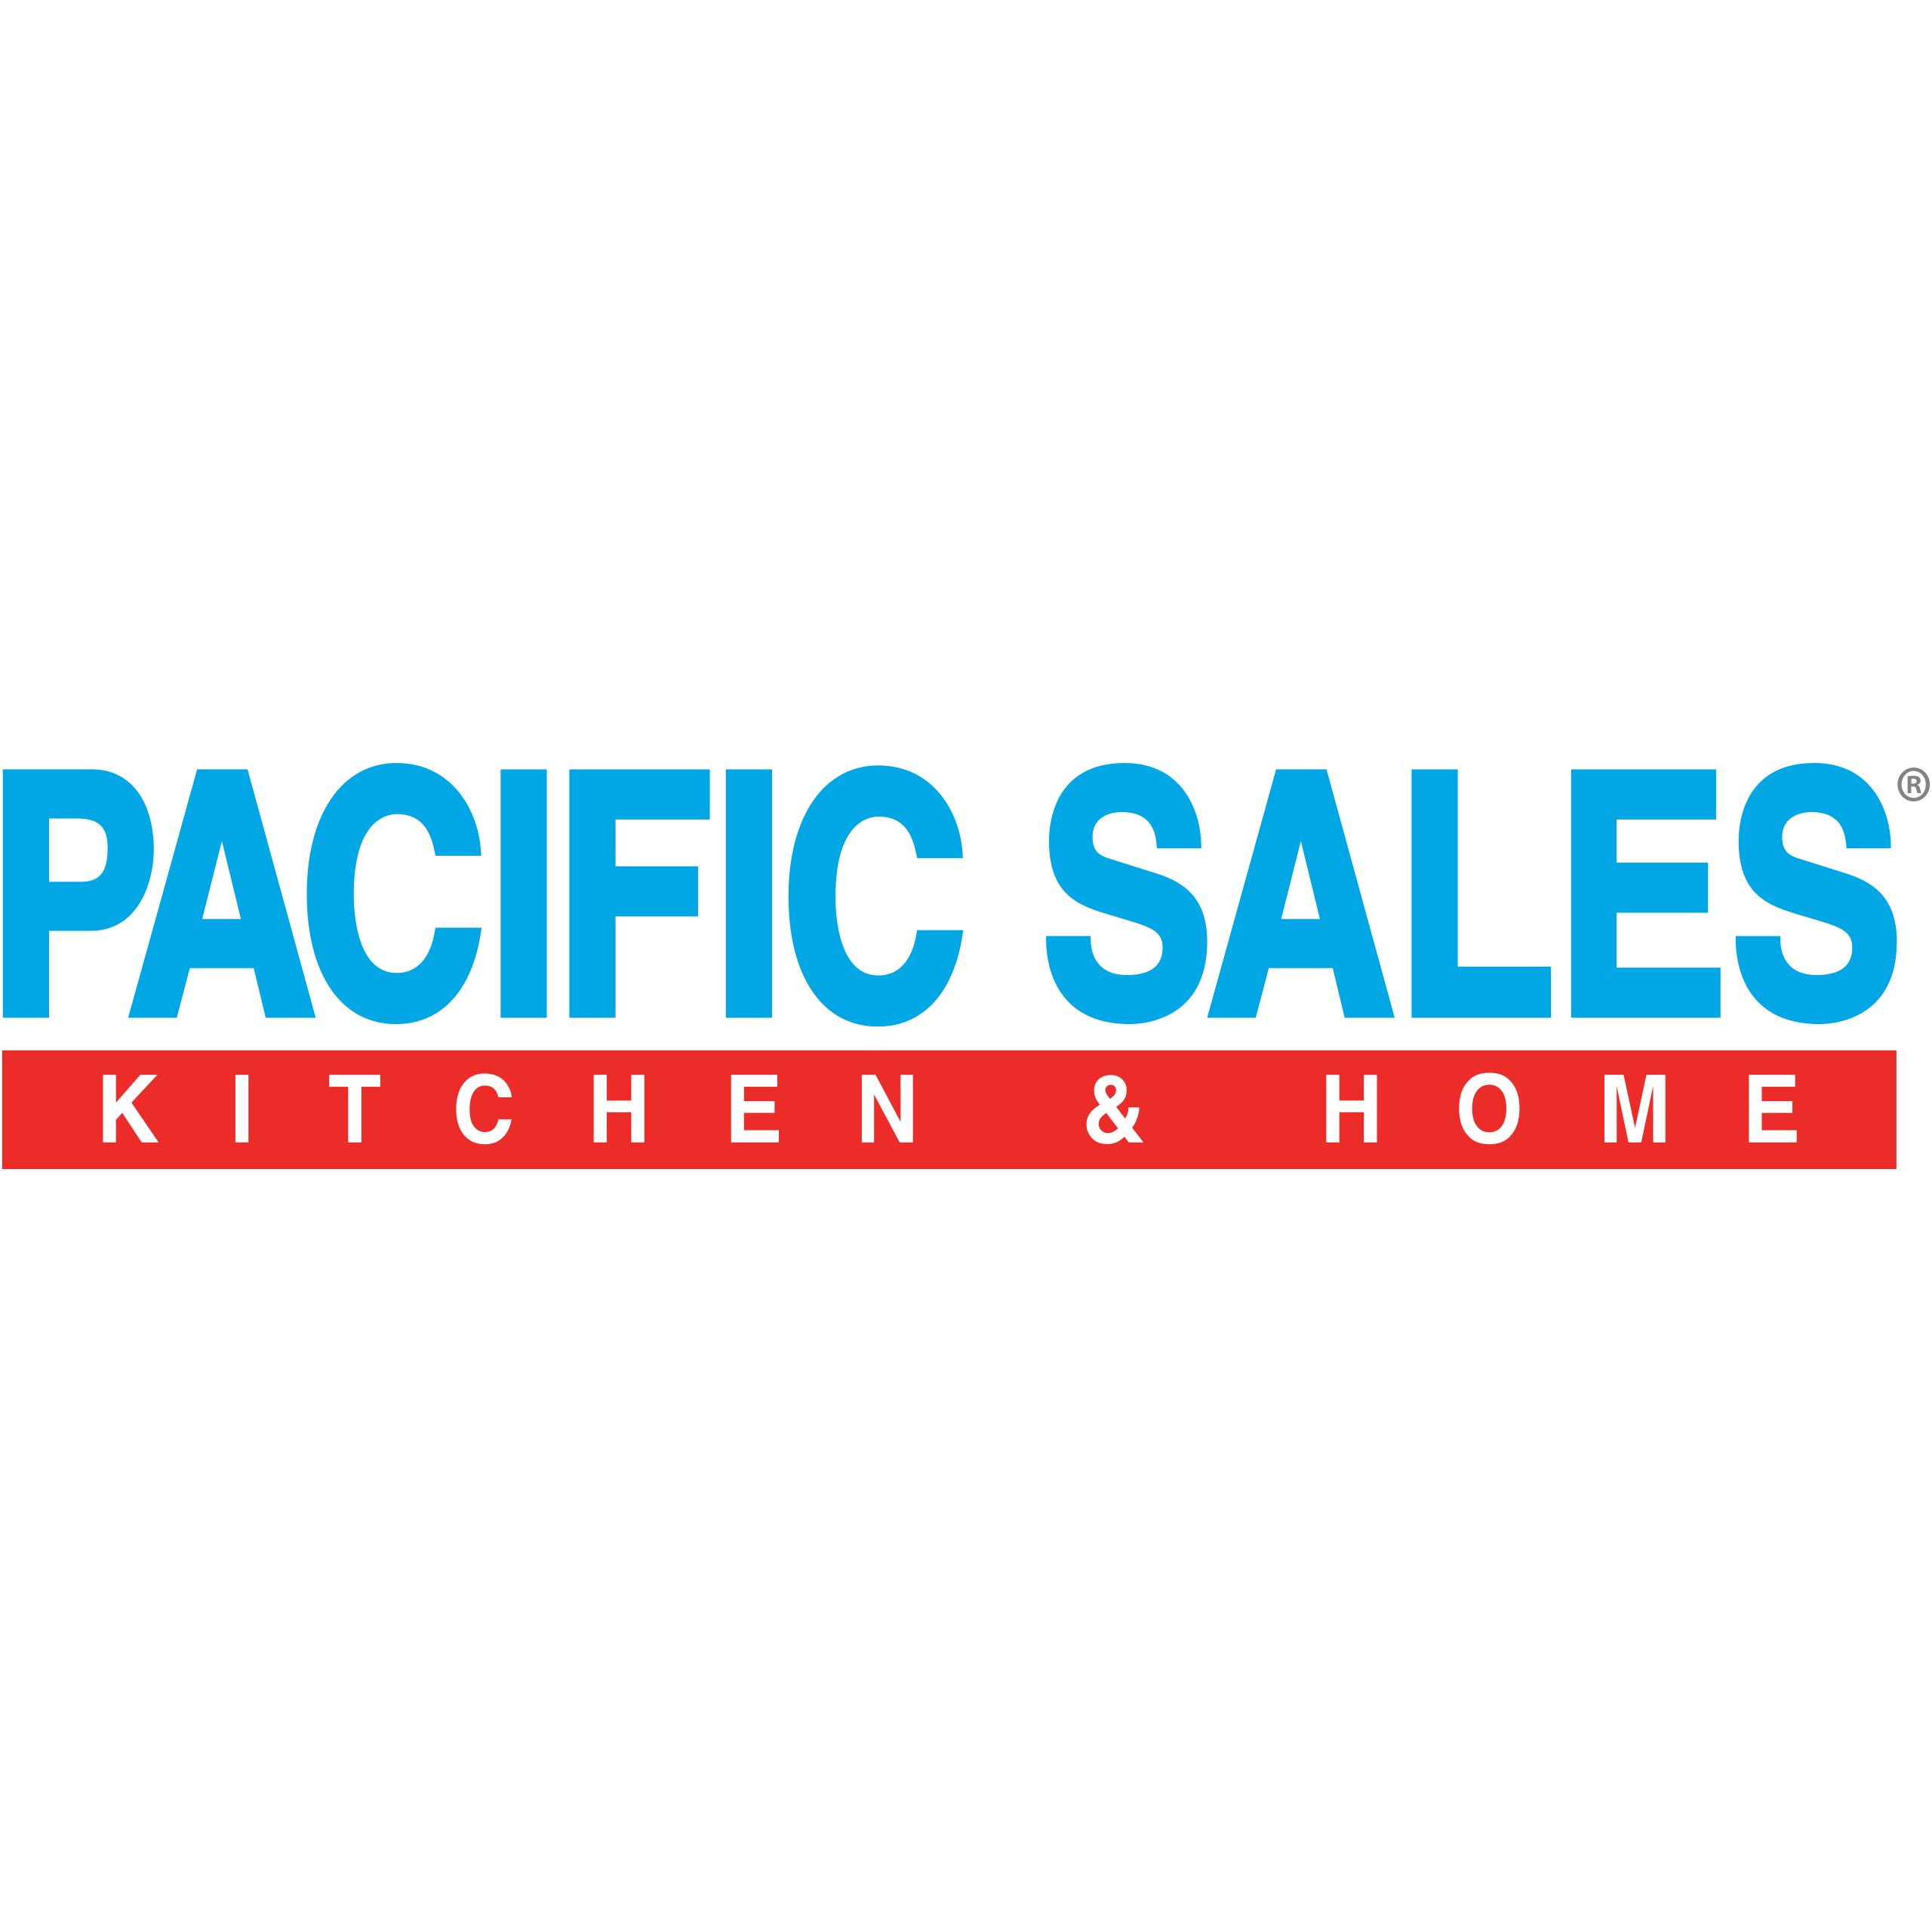 Pacific Sales Kitchen & Home Ontario - Ontario, CA 91764 - (909)919-7540 | ShowMeLocal.com